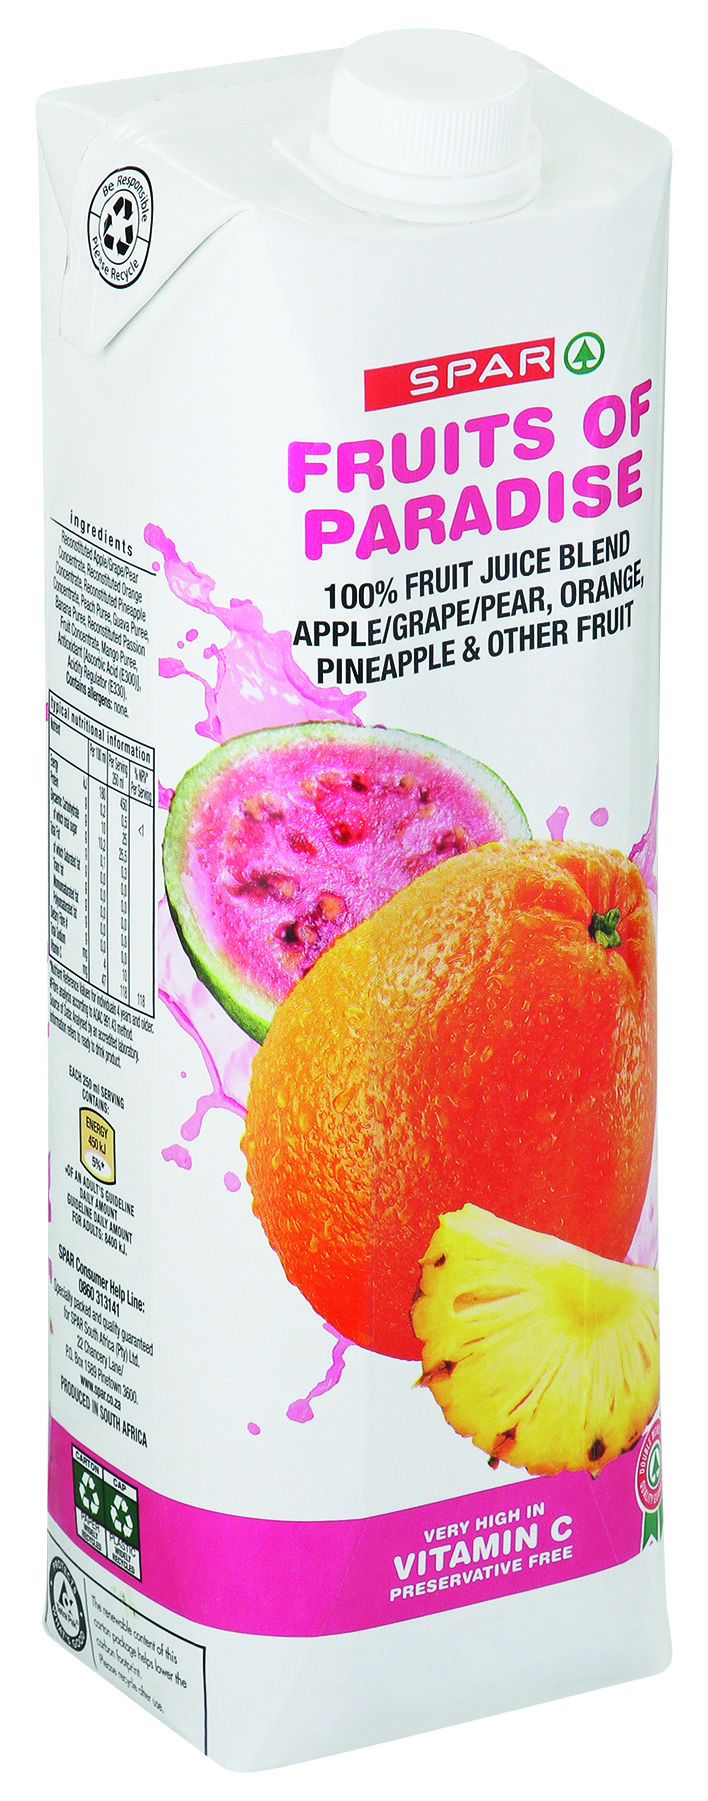 100% fruit juice blend - fruits of paradise